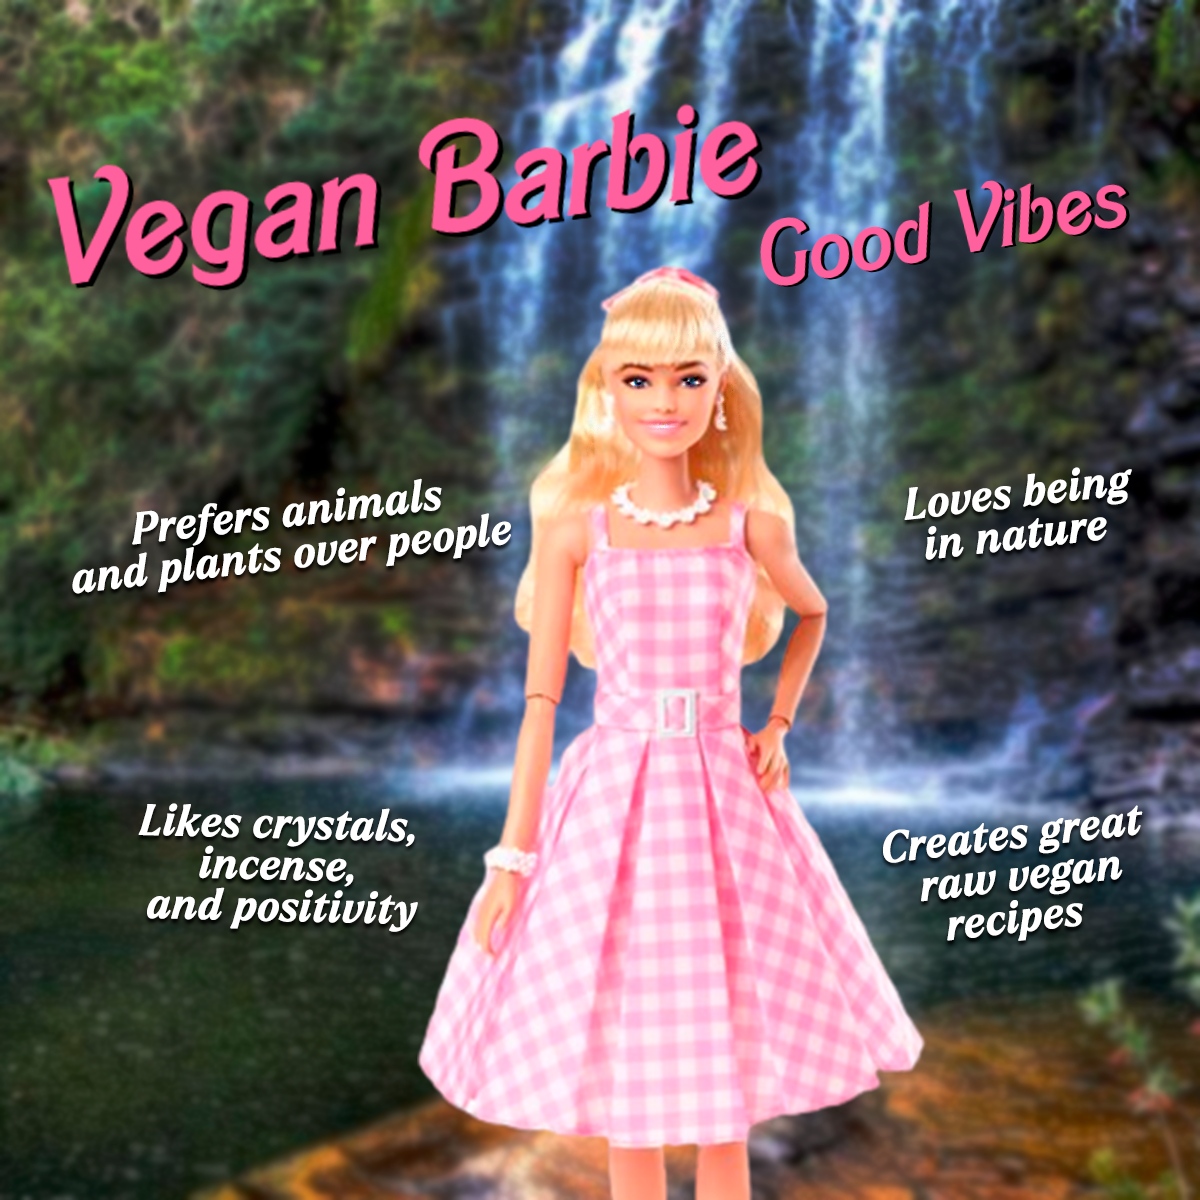 Which Barbie are you? 👸✨✨👗 Comment below  💖✨ #BarbieLove 
.
.
.
.
.
#BarbieVibes #BarbieGirl #BarbieInspiration #BarbieStyle #BarbieLife  #Fashionista #DollsOfInstagram #BarbieWorld #DreamHouse #govegan #vegansofig #plantbased  #veganlifestyle #veganlove  #relationship